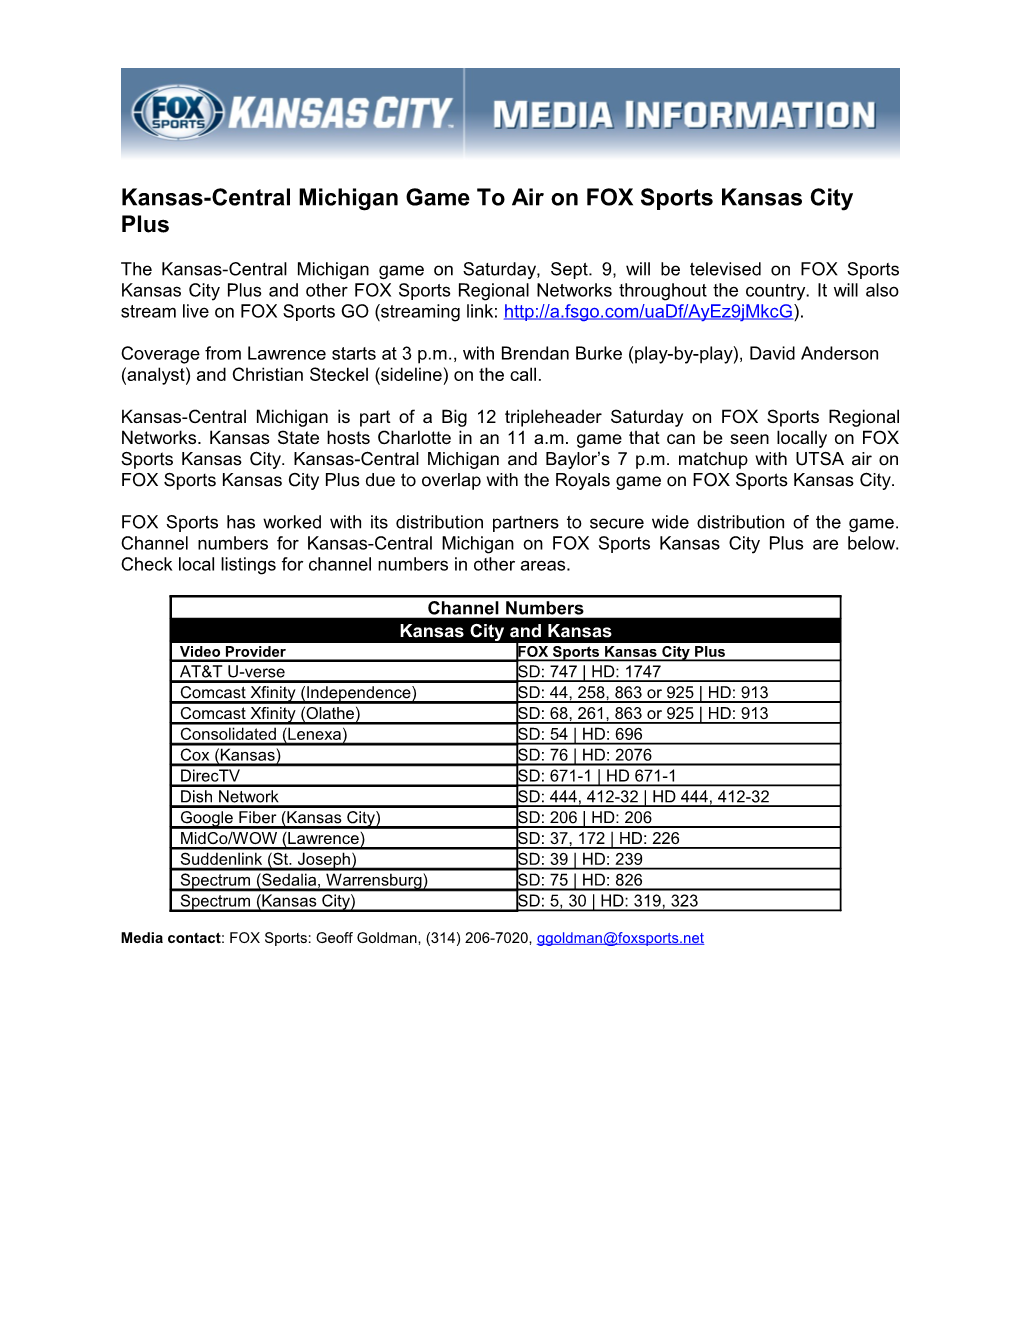 Kansas-Central Michigan Game to Air on FOX Sports Kansas City Plus